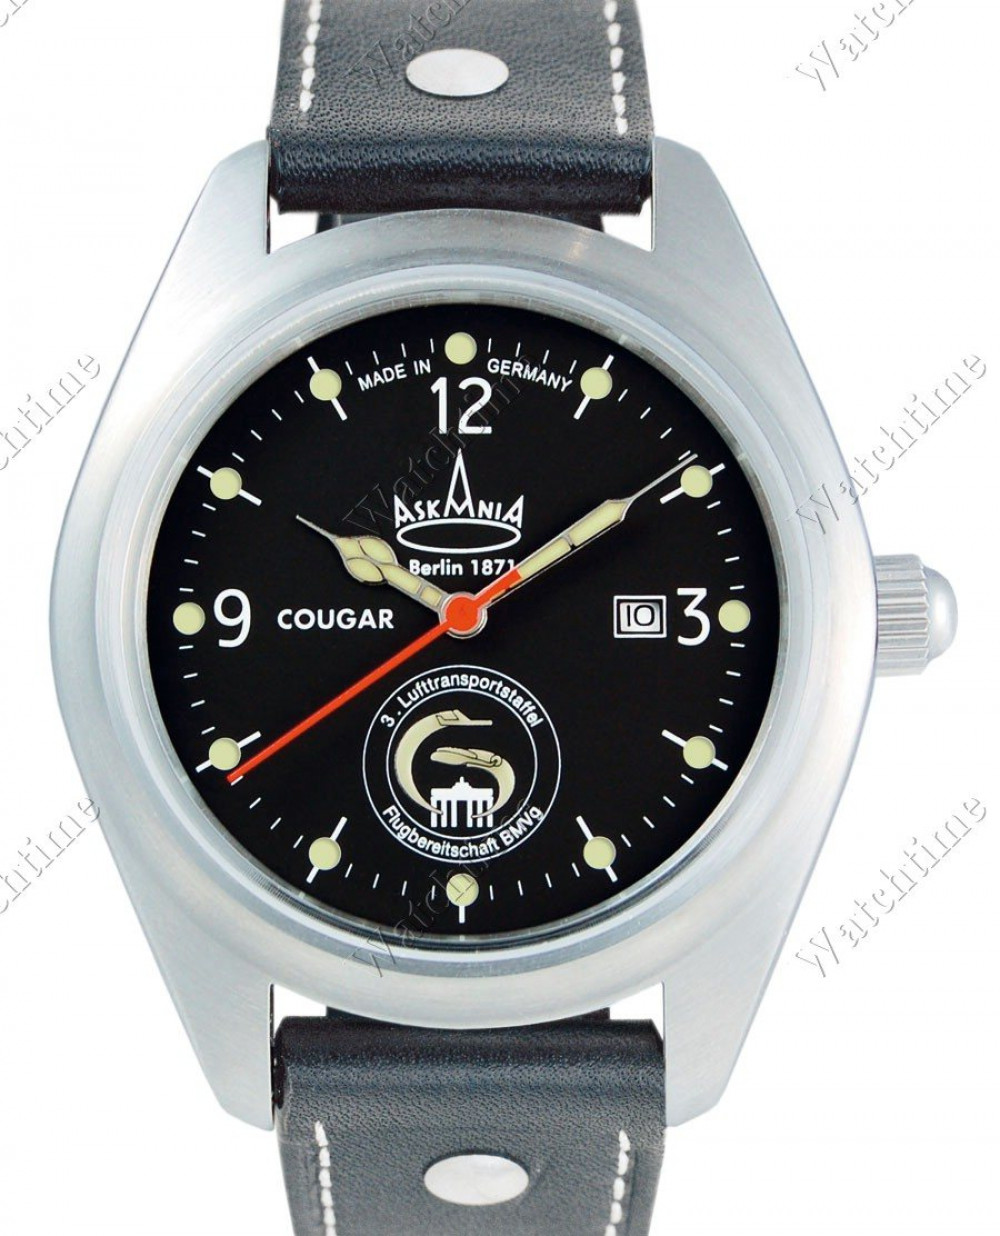 Zegarek firmy Askania, model Staffeluhr Cougar